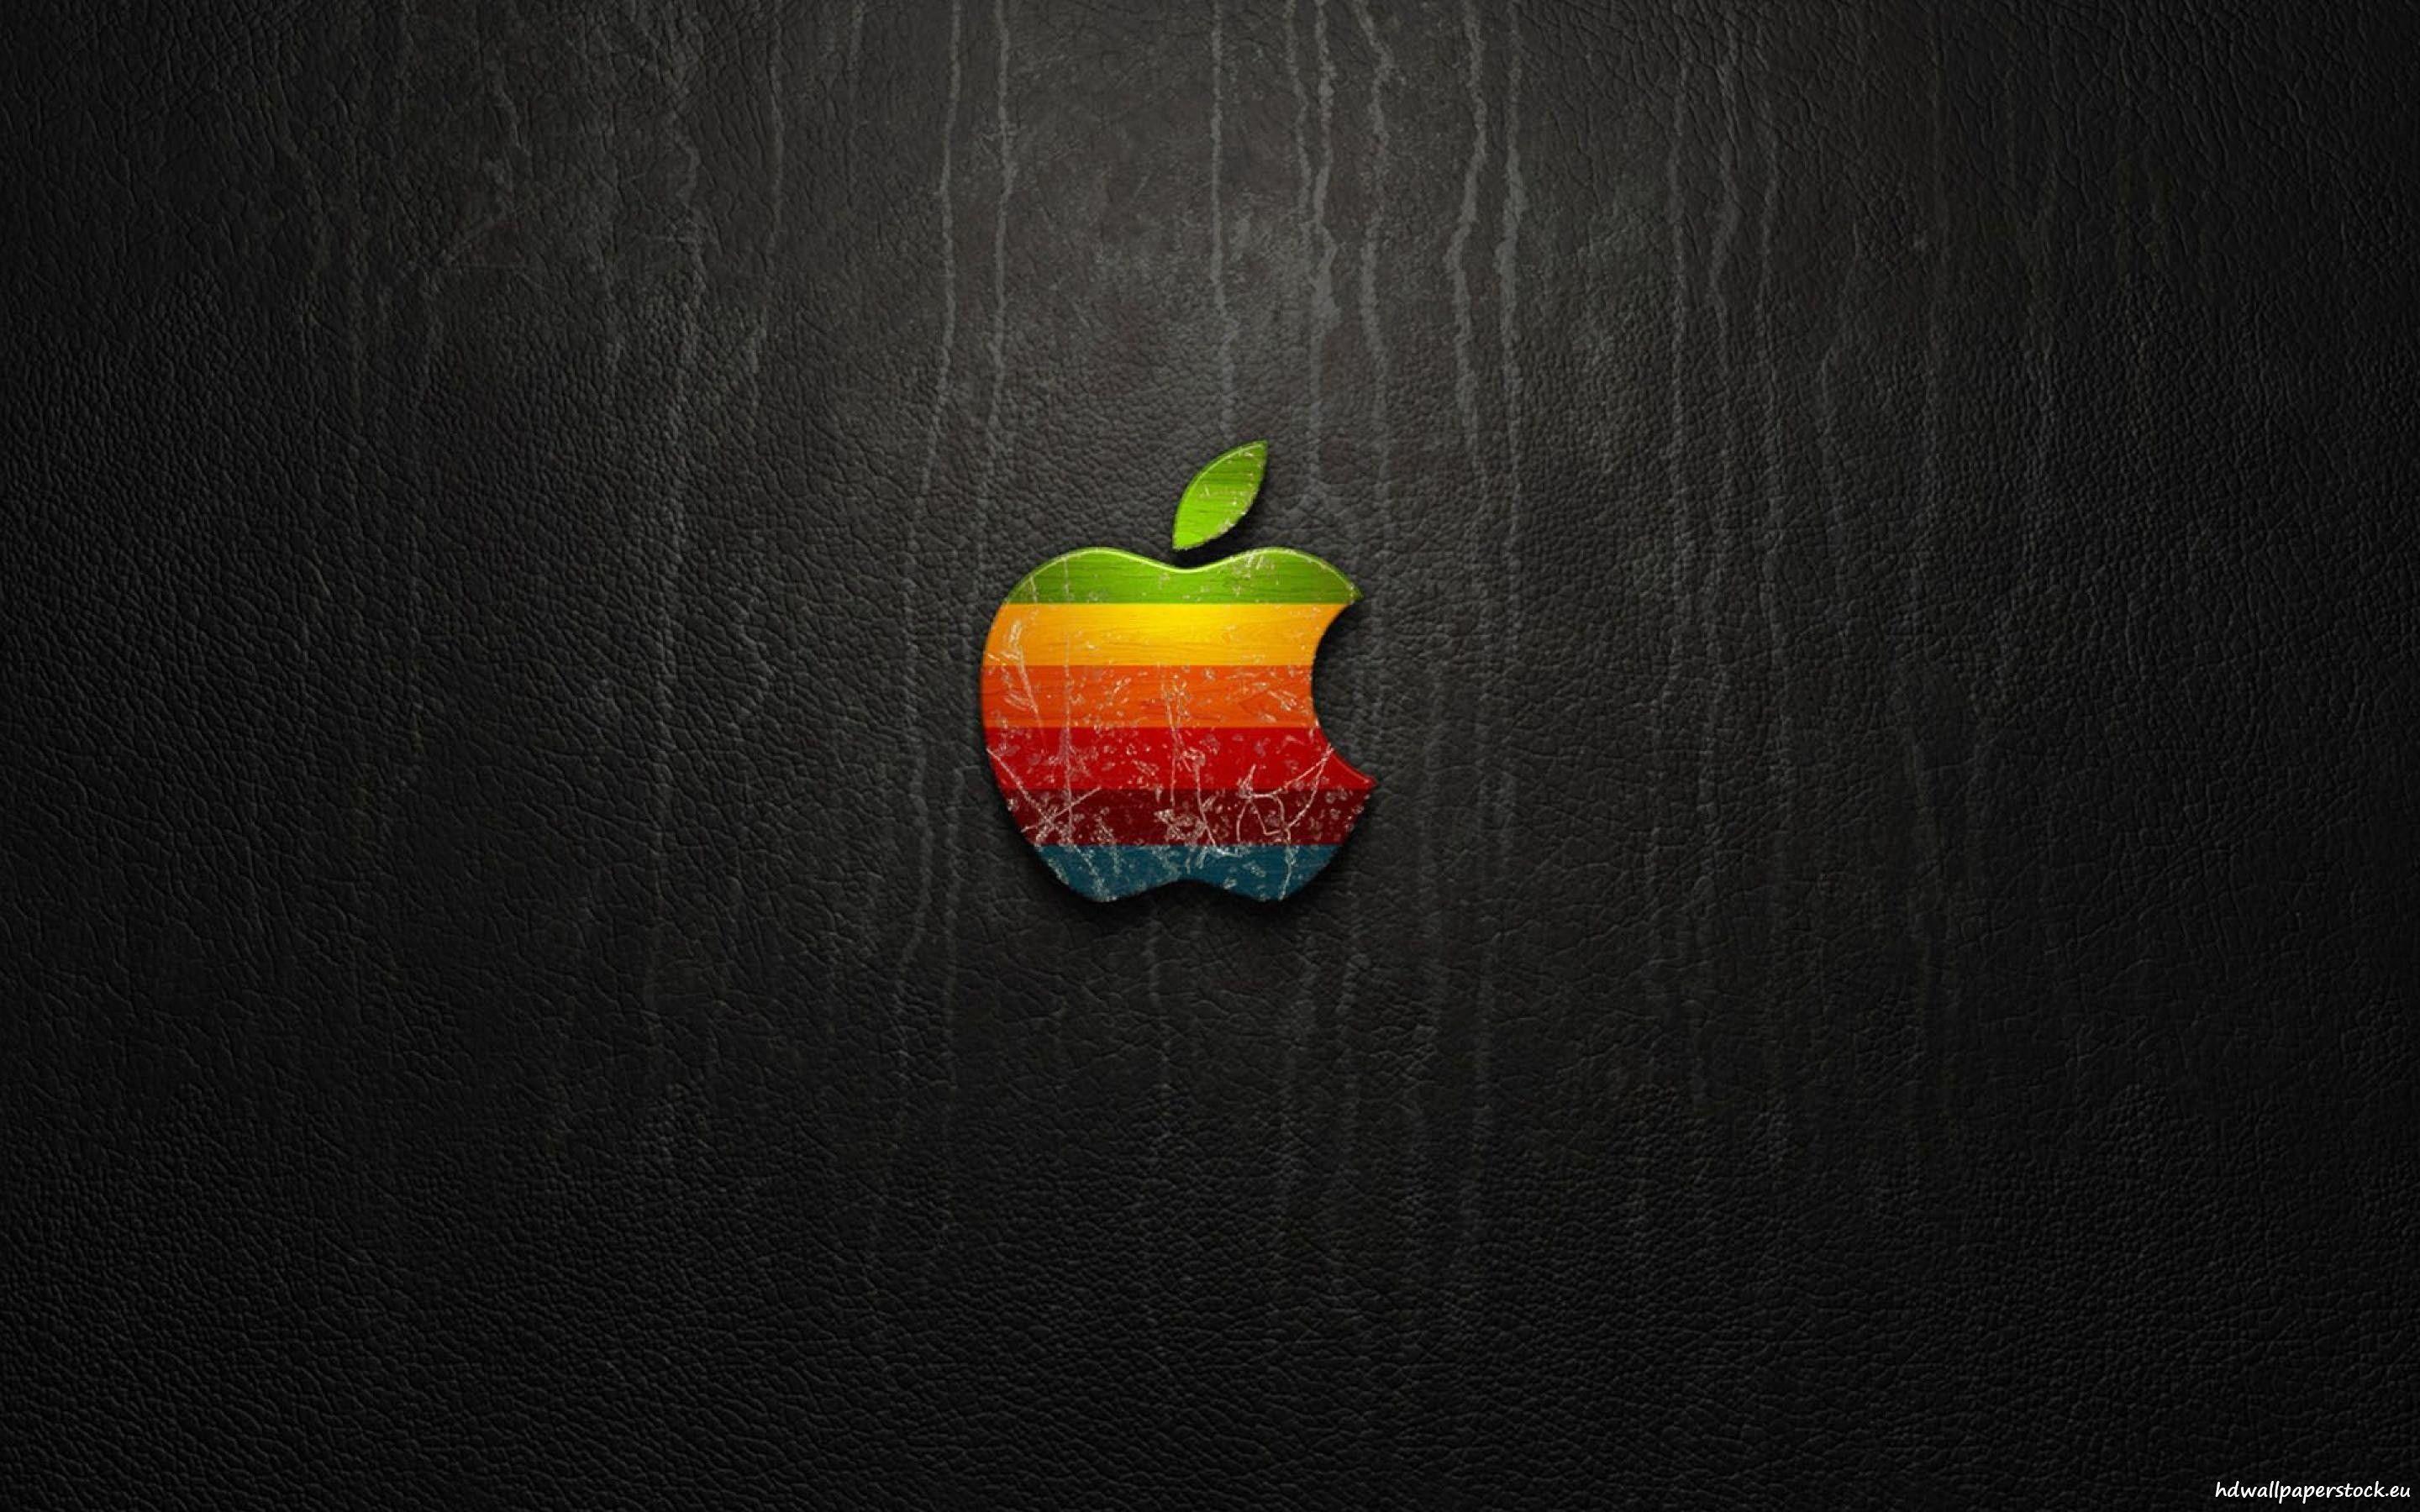 Apple Logo HD Wallpapers - Top Free